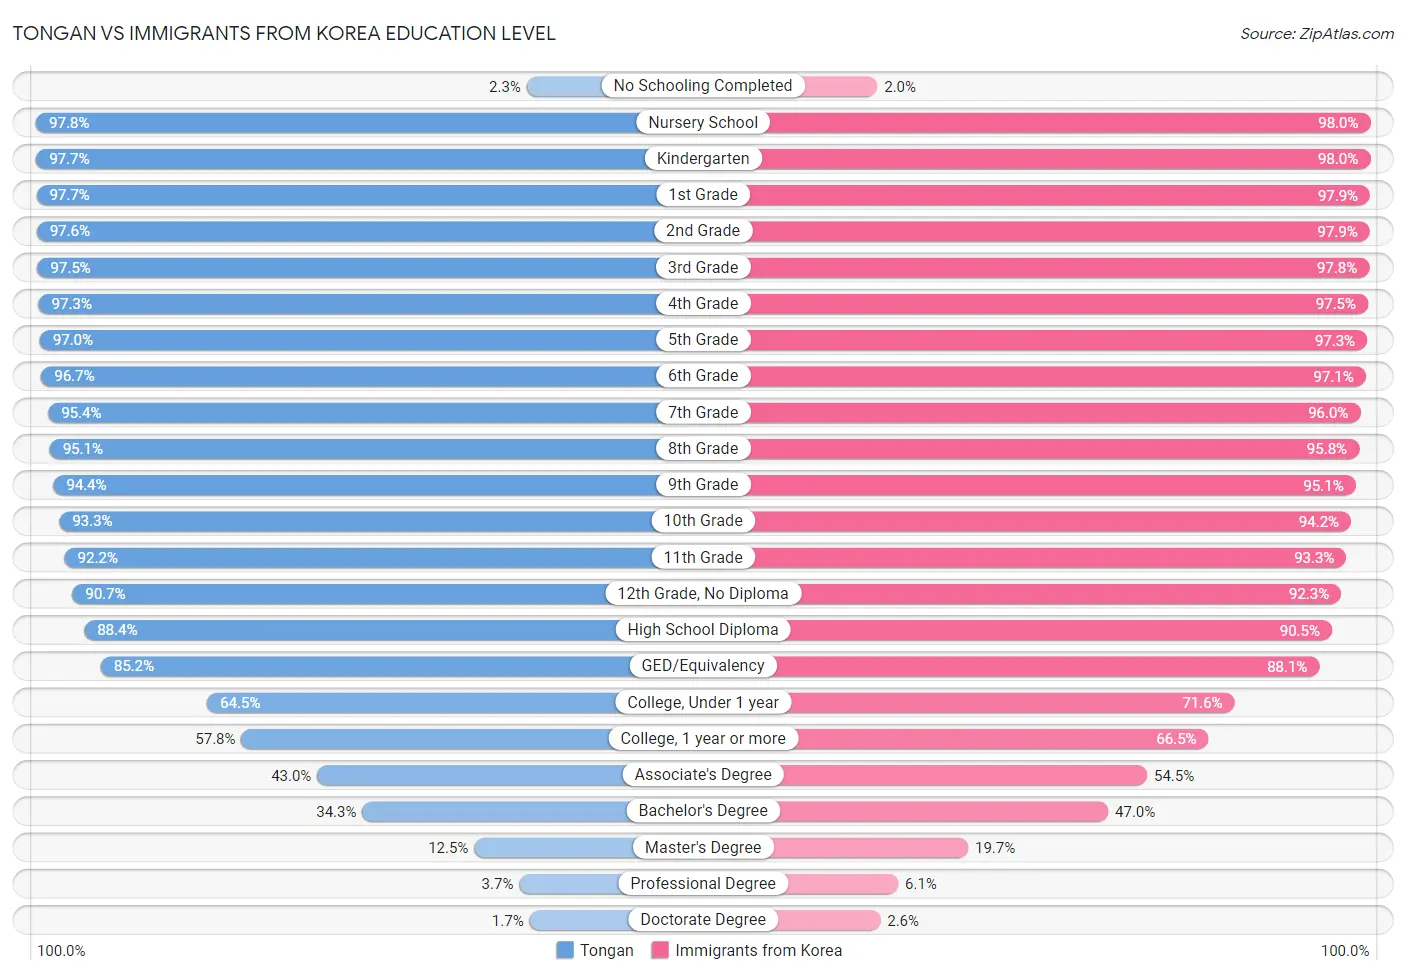 Tongan vs Immigrants from Korea Education Level